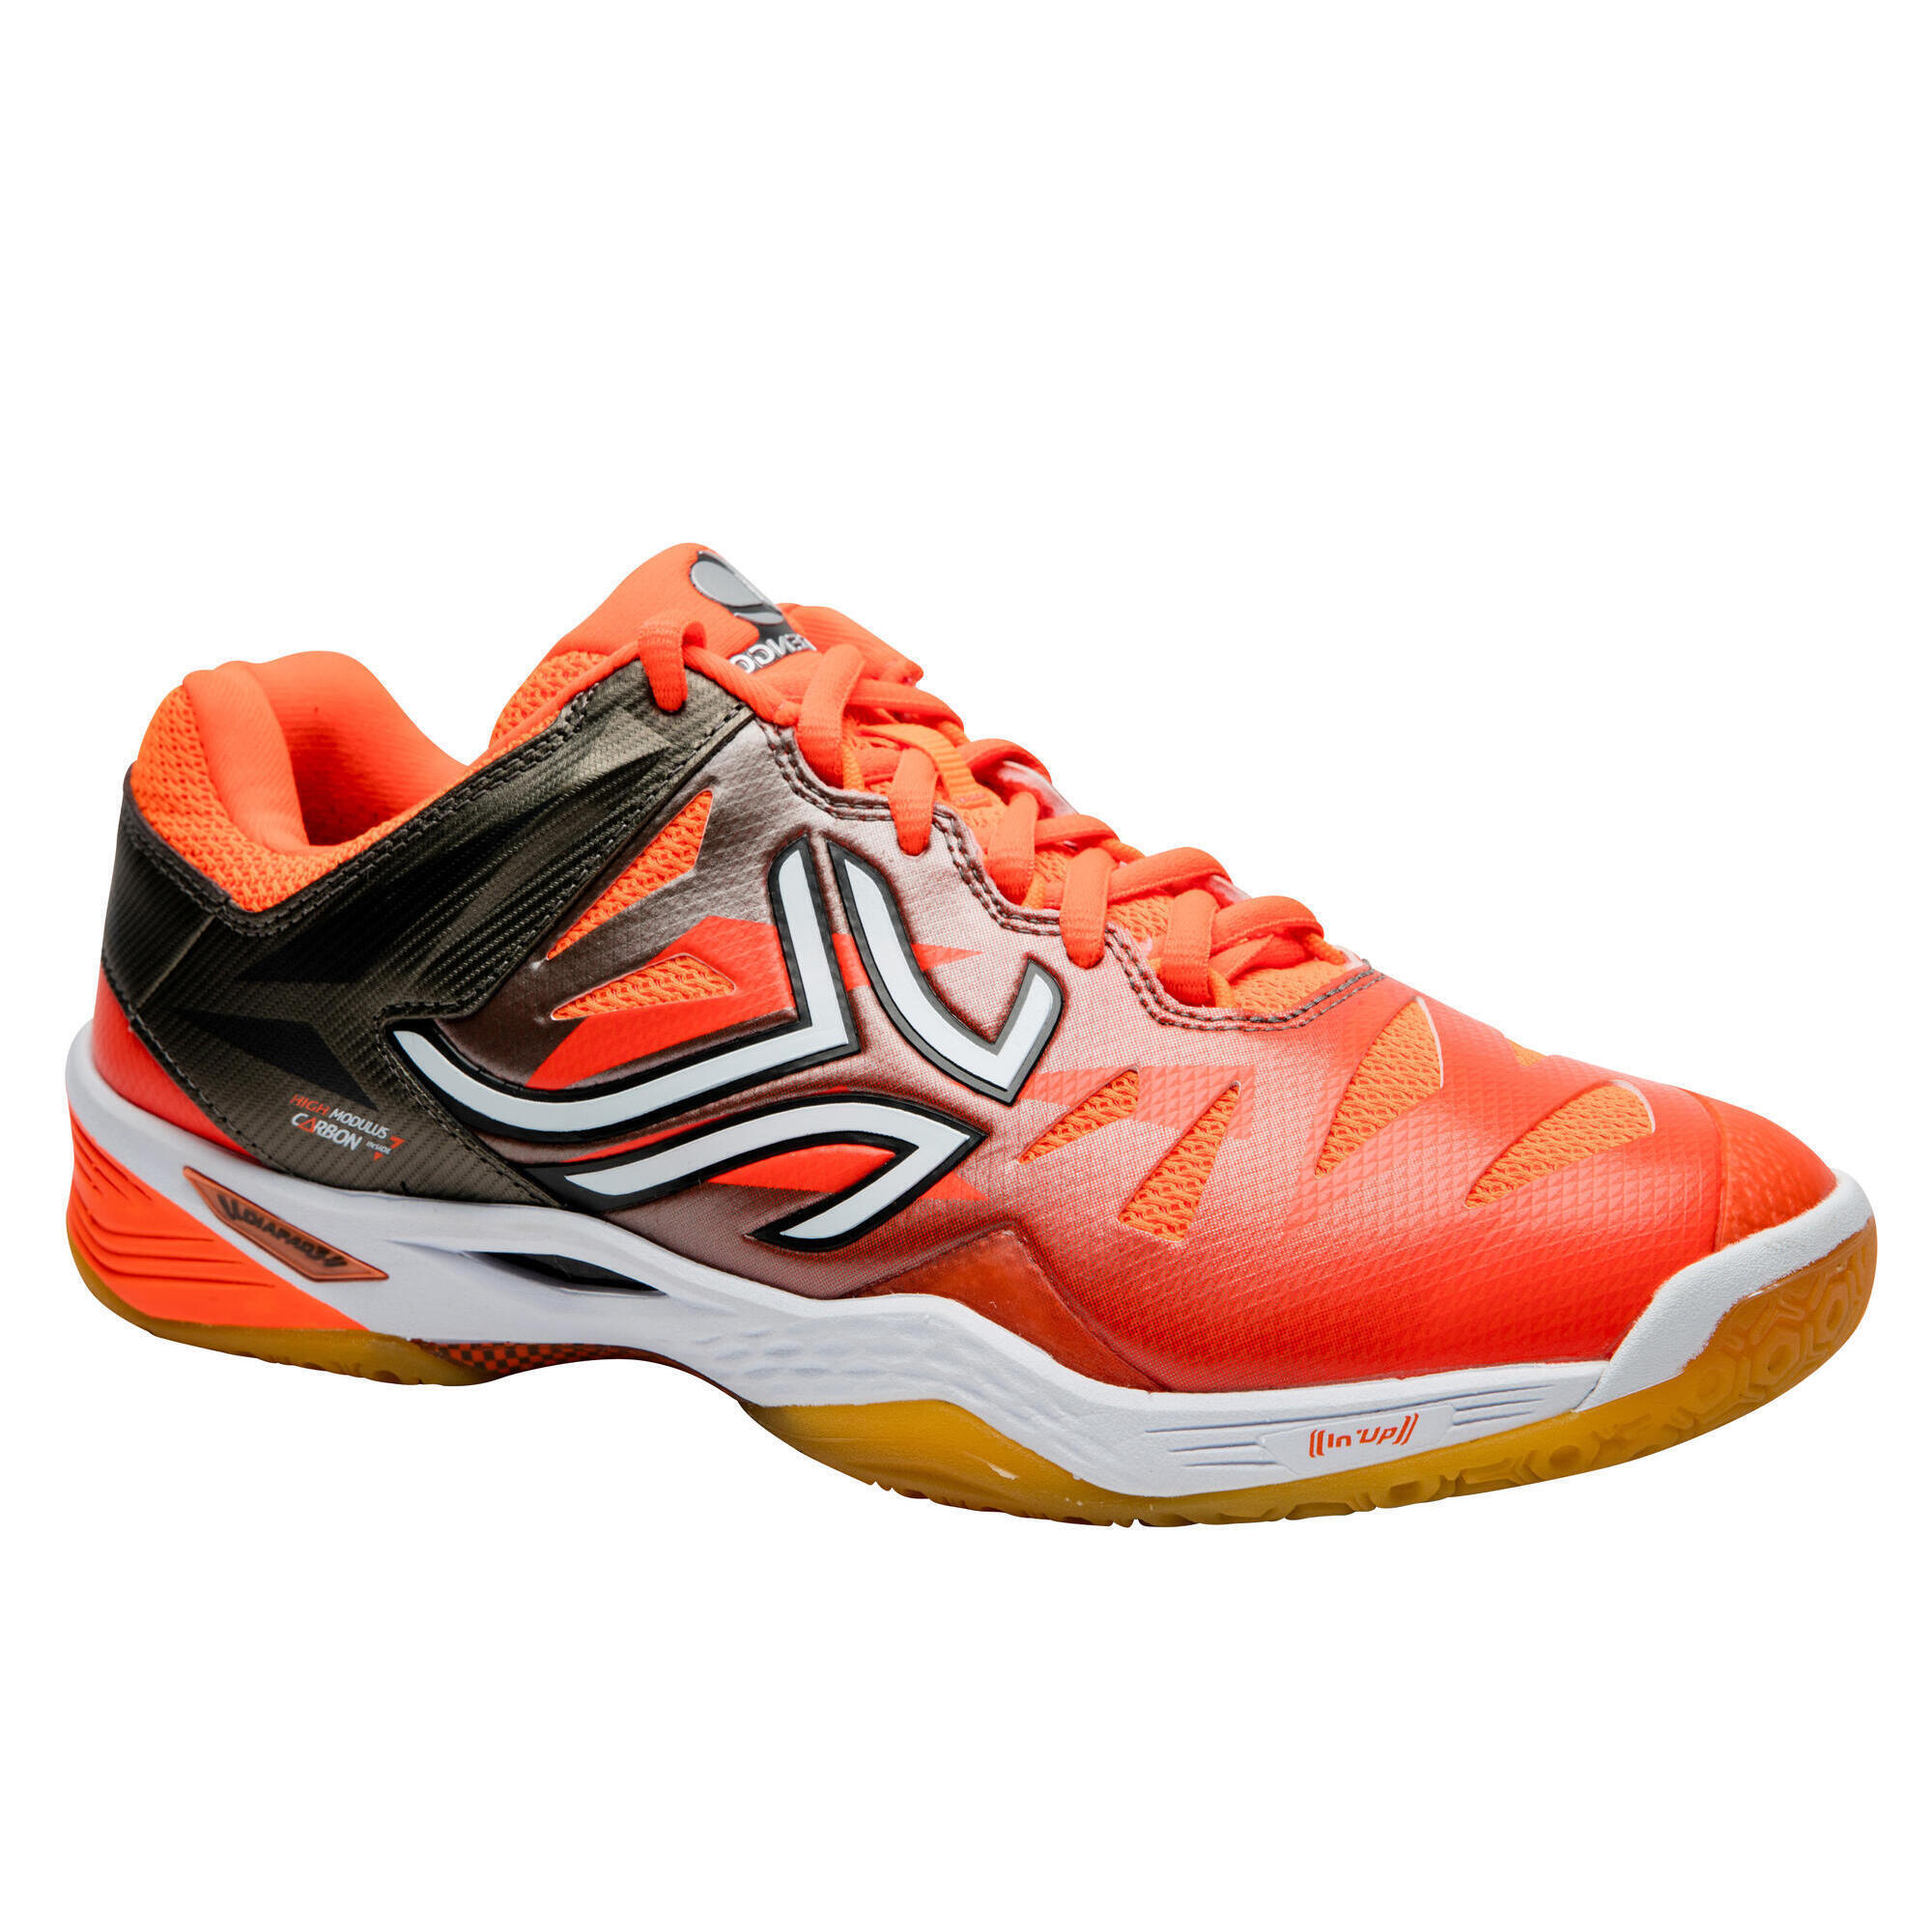 BS990 Badminton Shoes - Orange - Decathlon